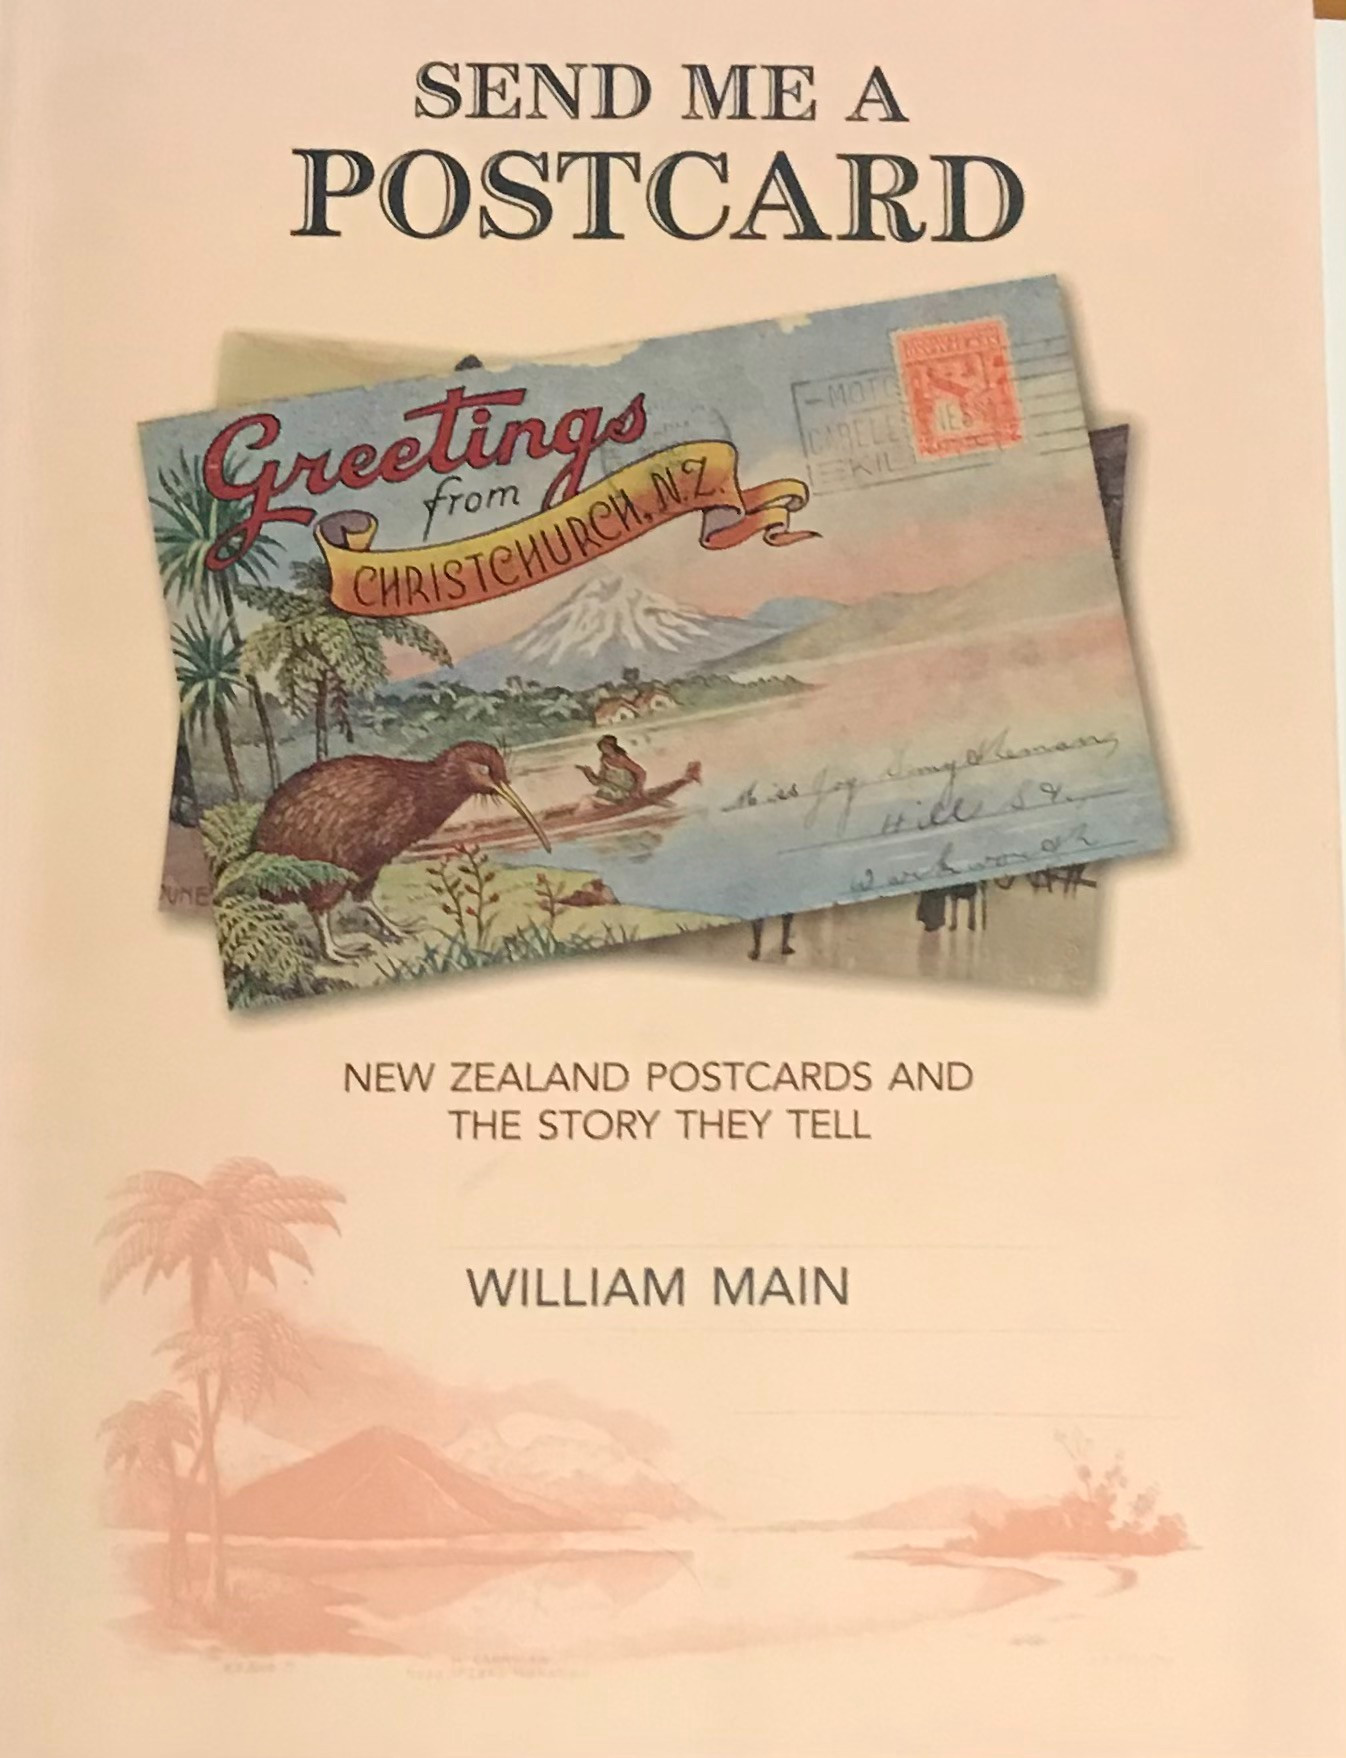 NZ Postcards